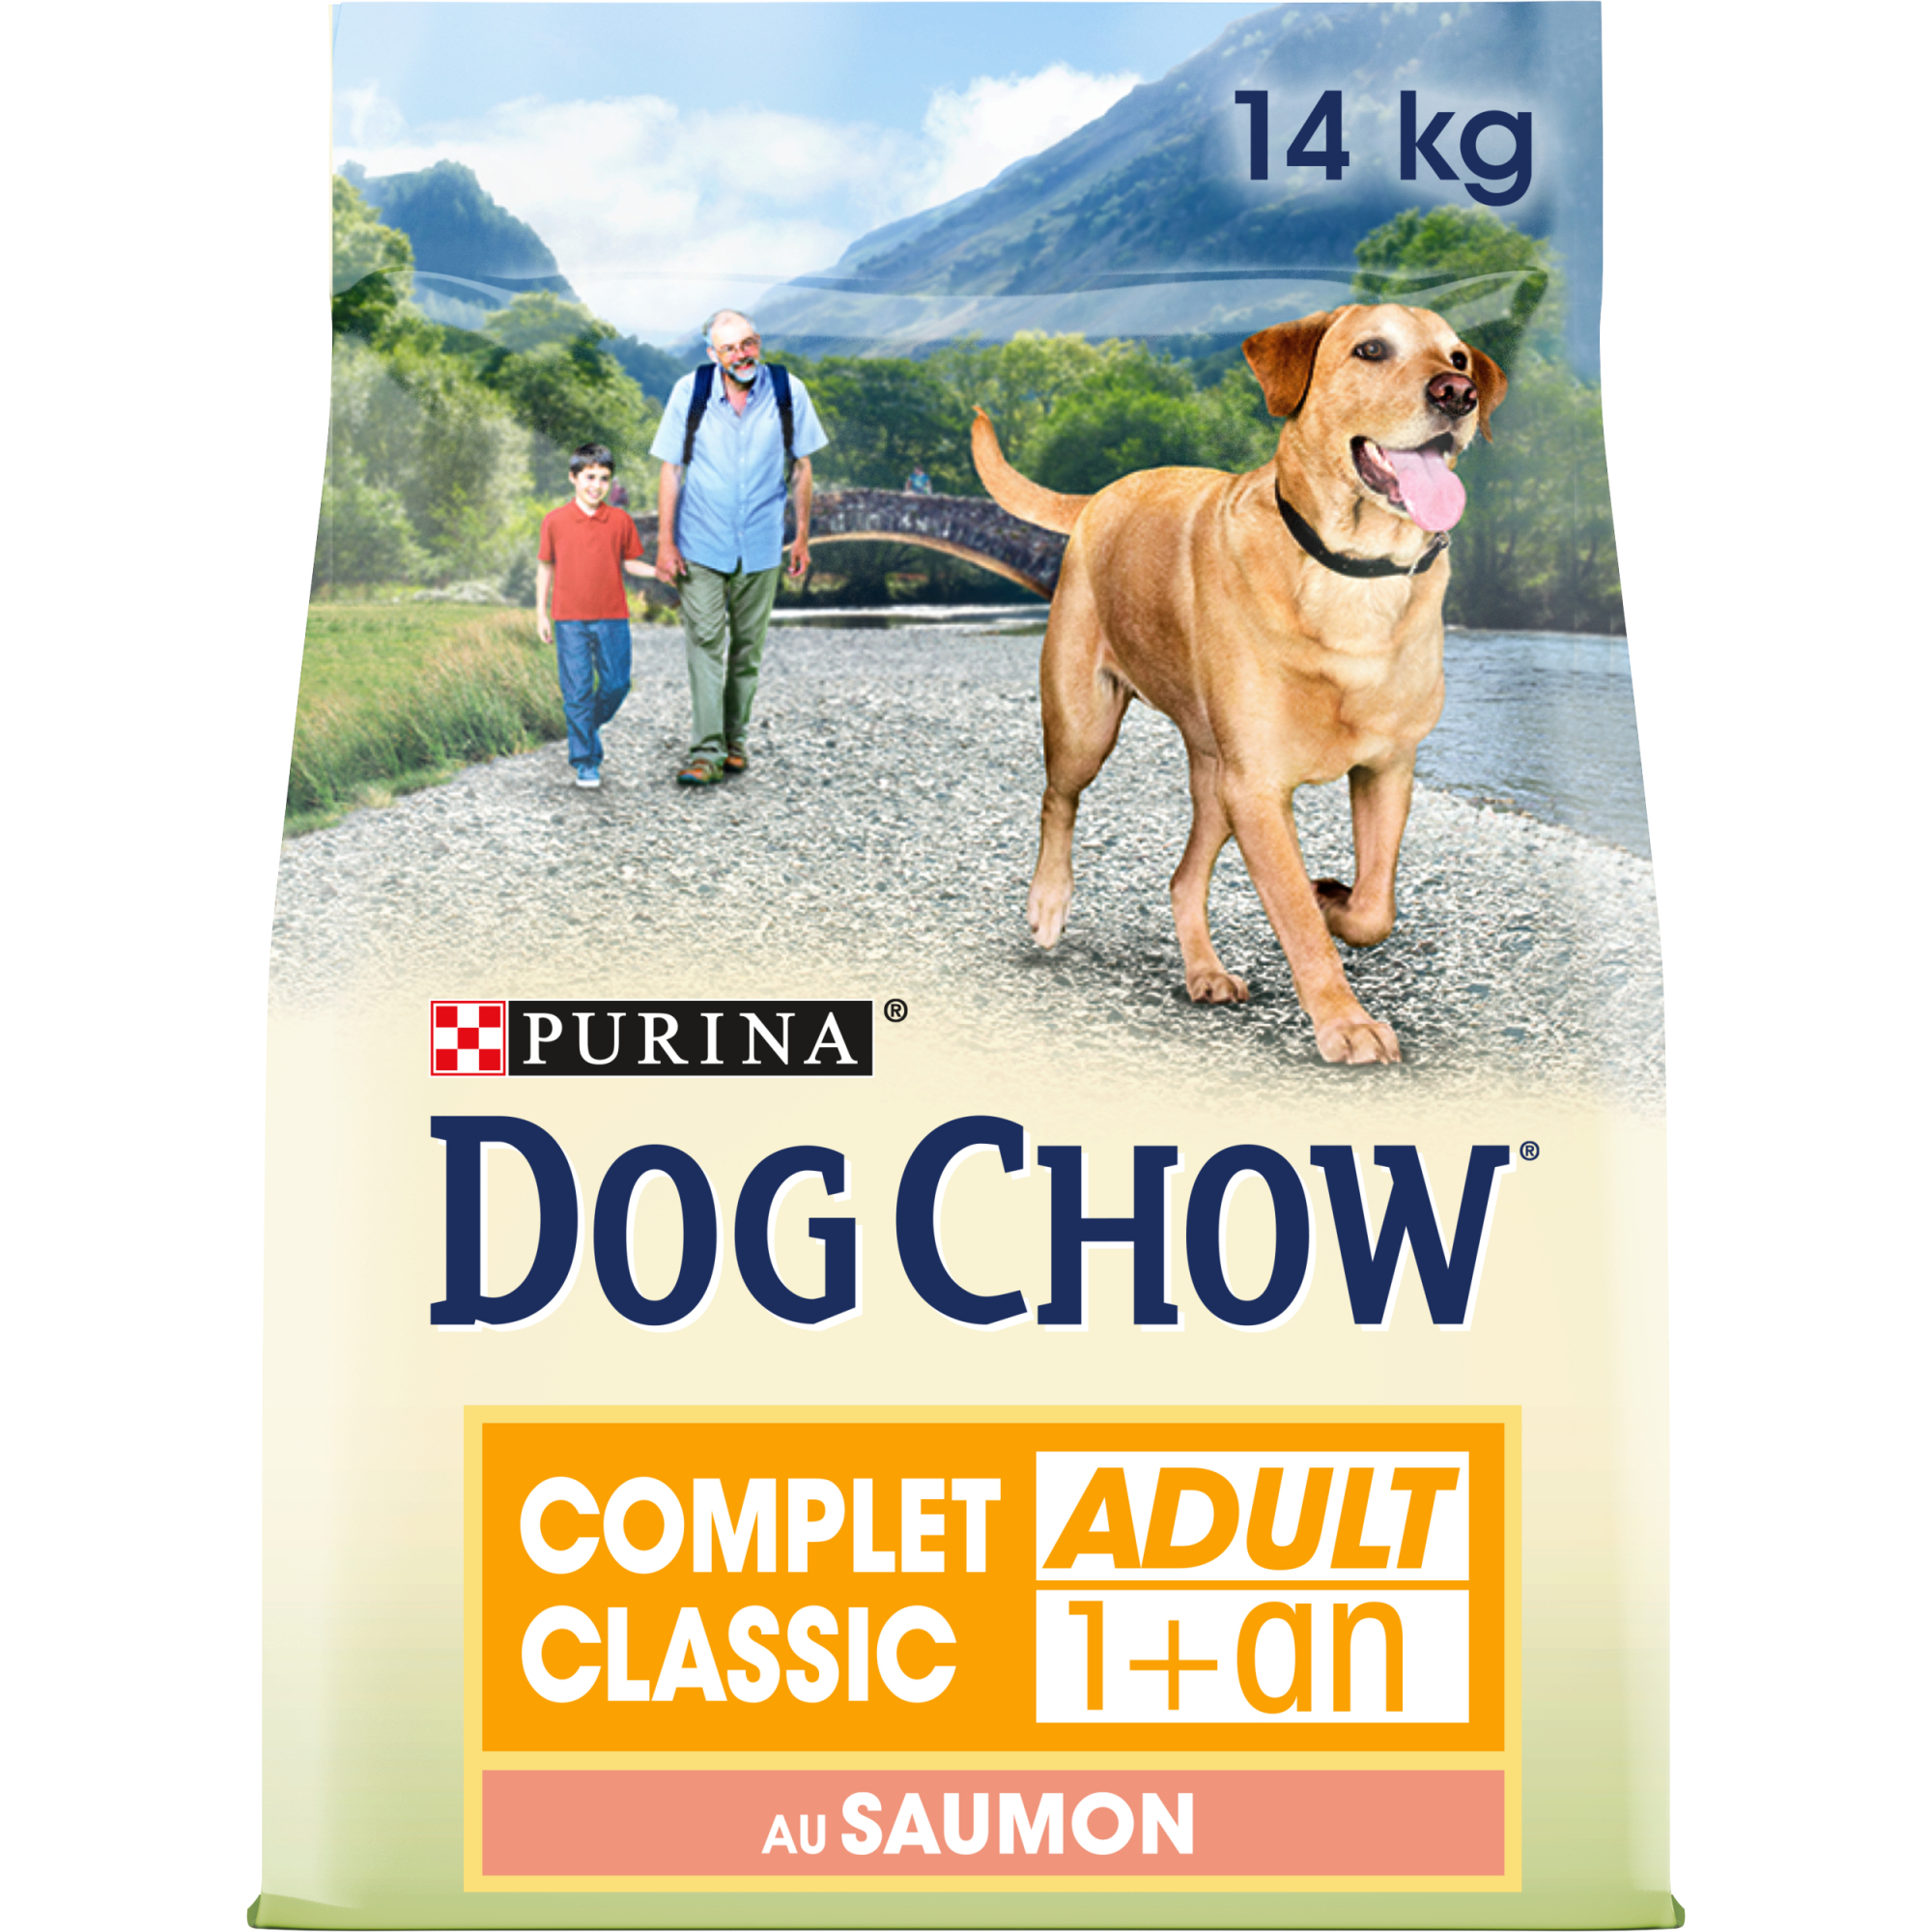 DOG CHOW Complet Classic de Salmón para perros